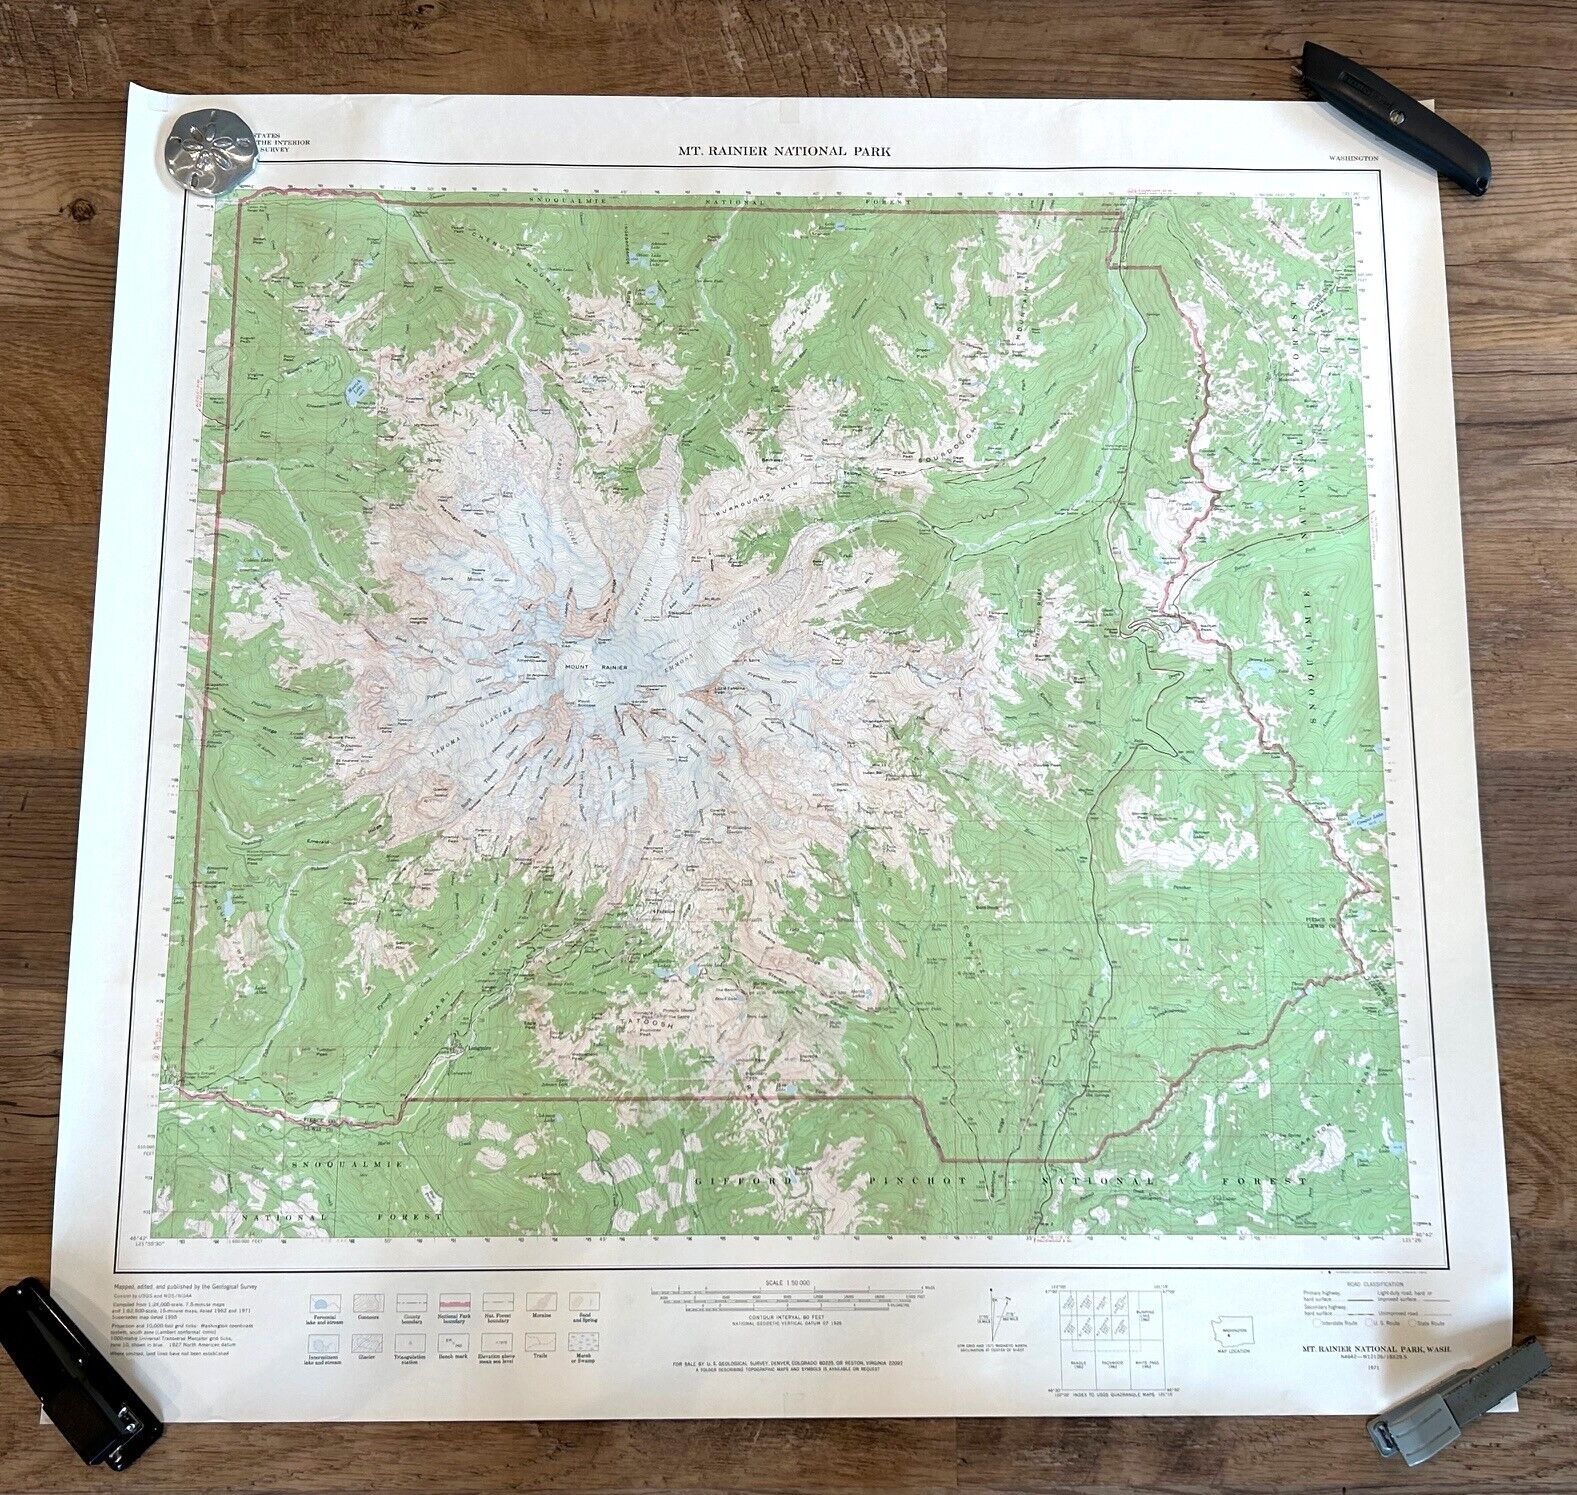 Mt. Rainier National Park 1971 USGS Geological Survey Topographic Map Washington